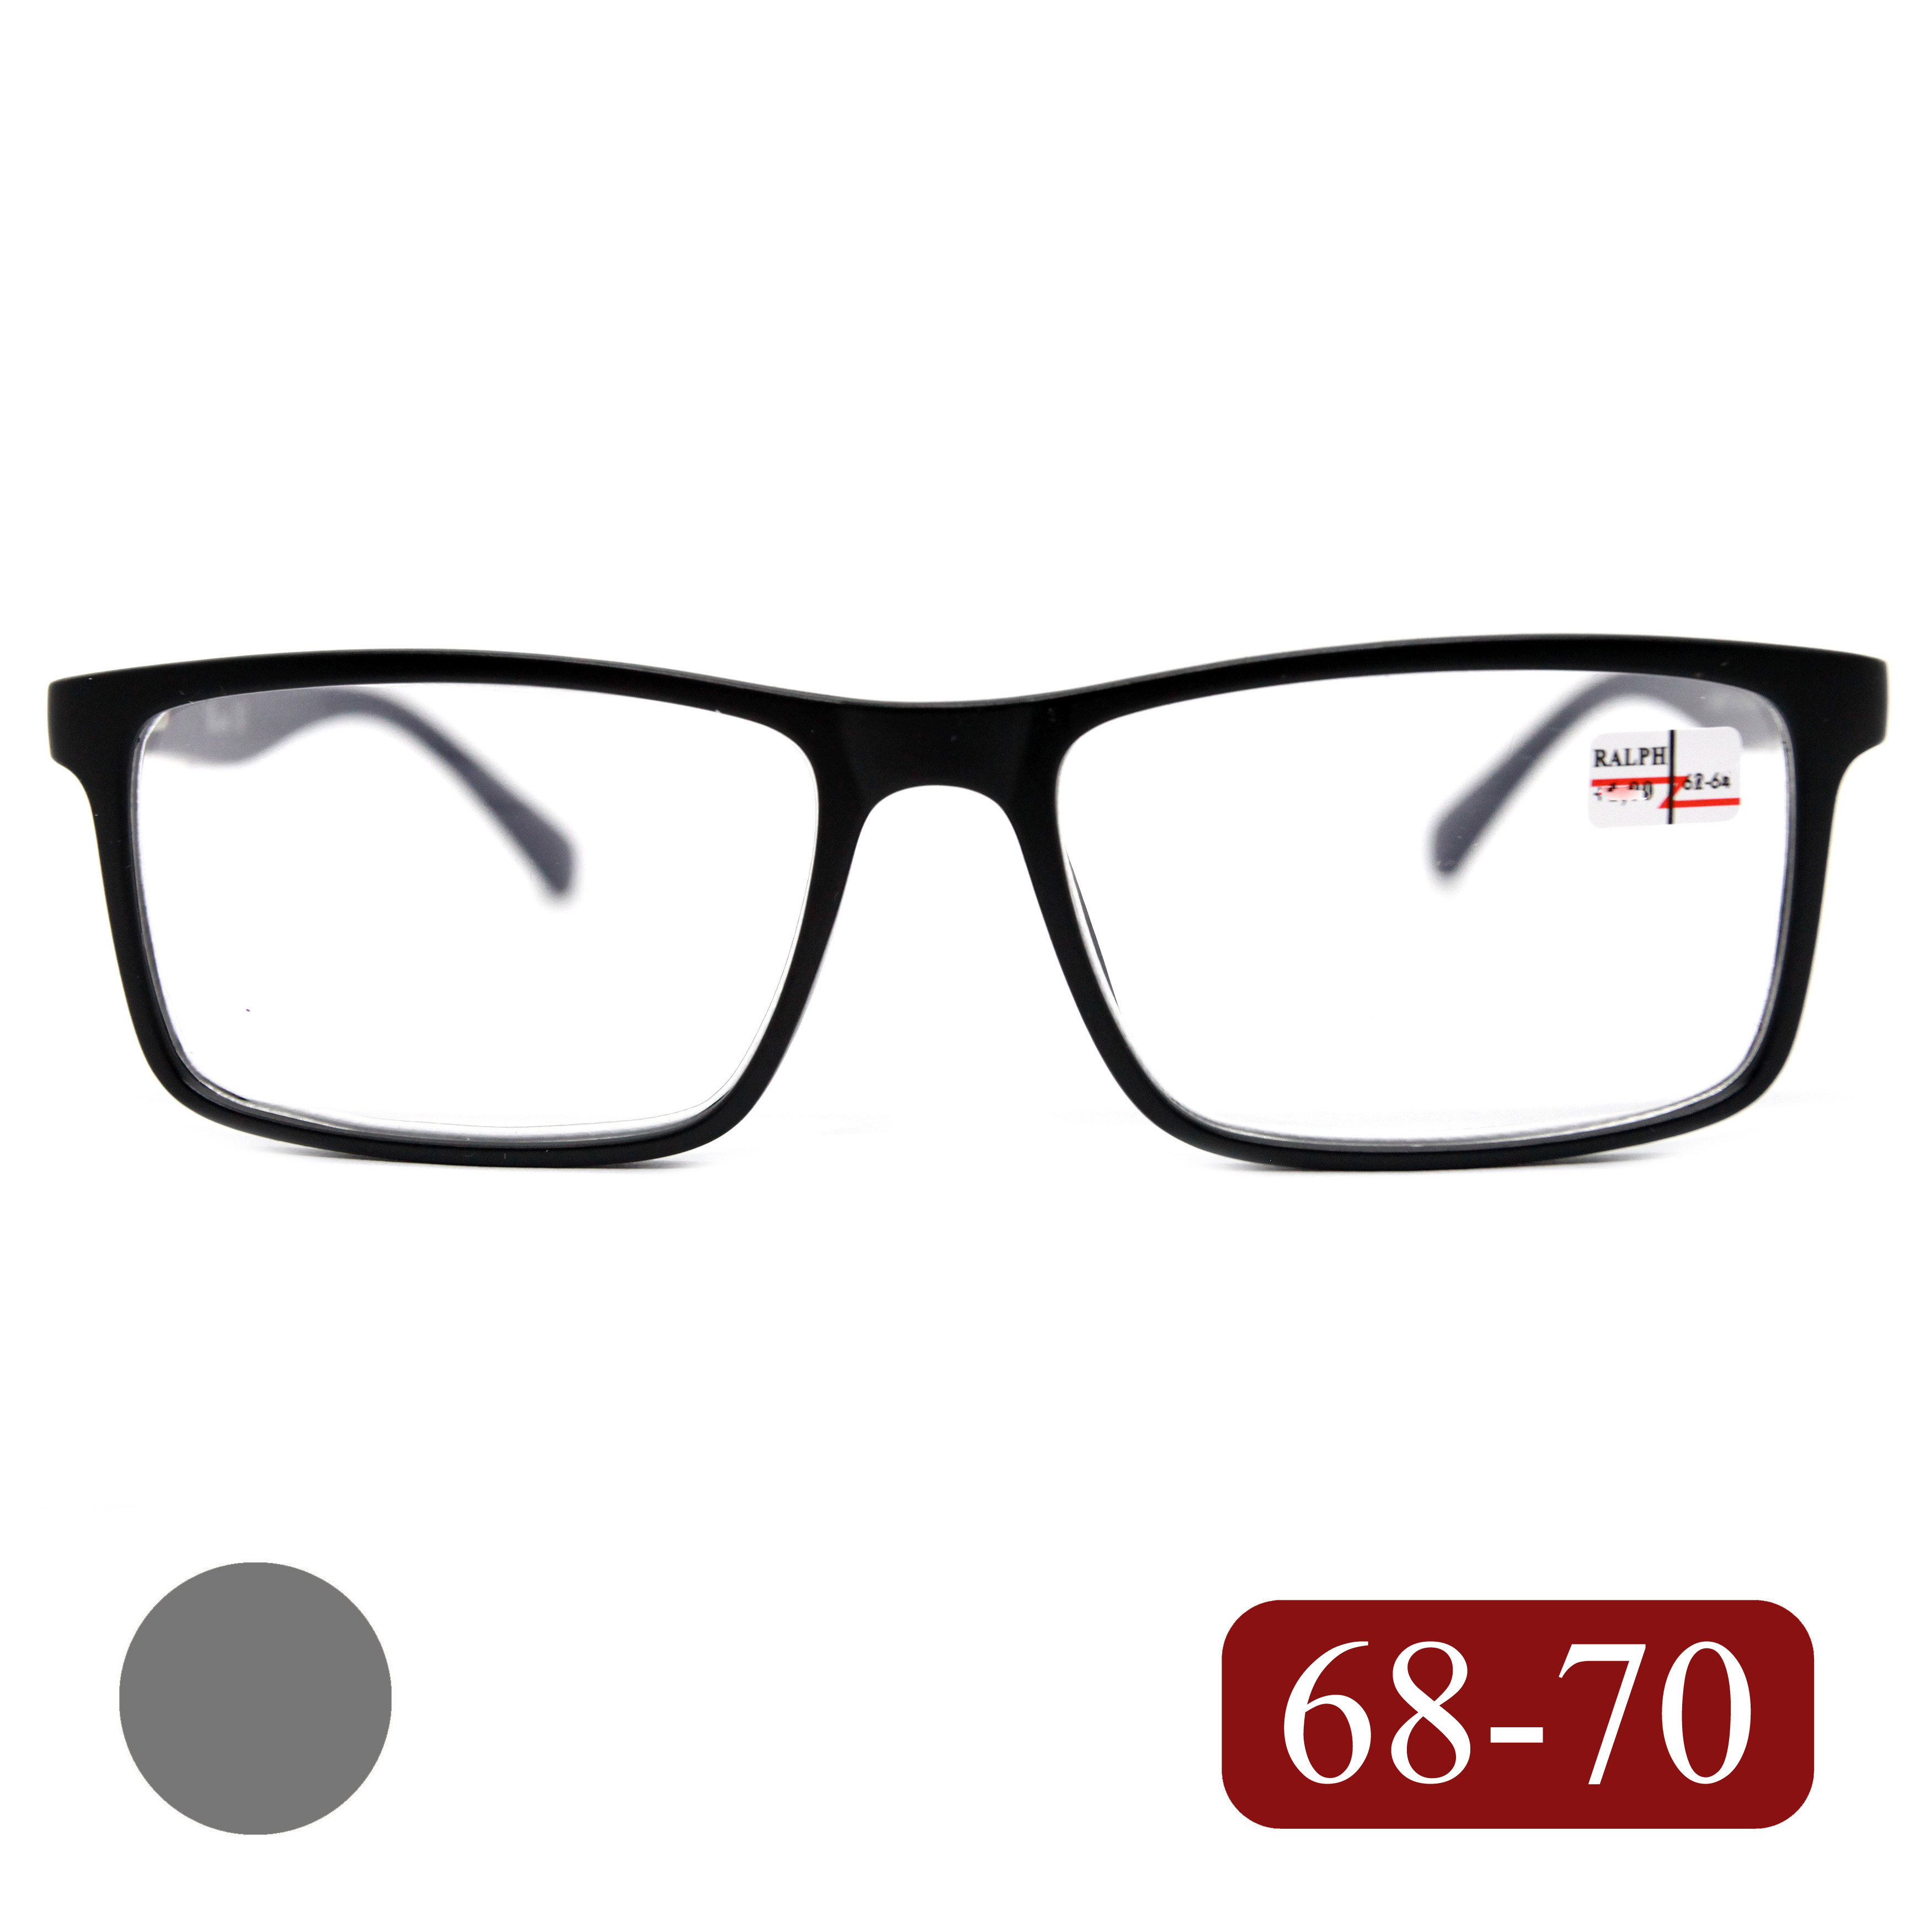 Готовые очки RALPH 0682 +5,00, без футляра, черно-серый, РЦ 68-70